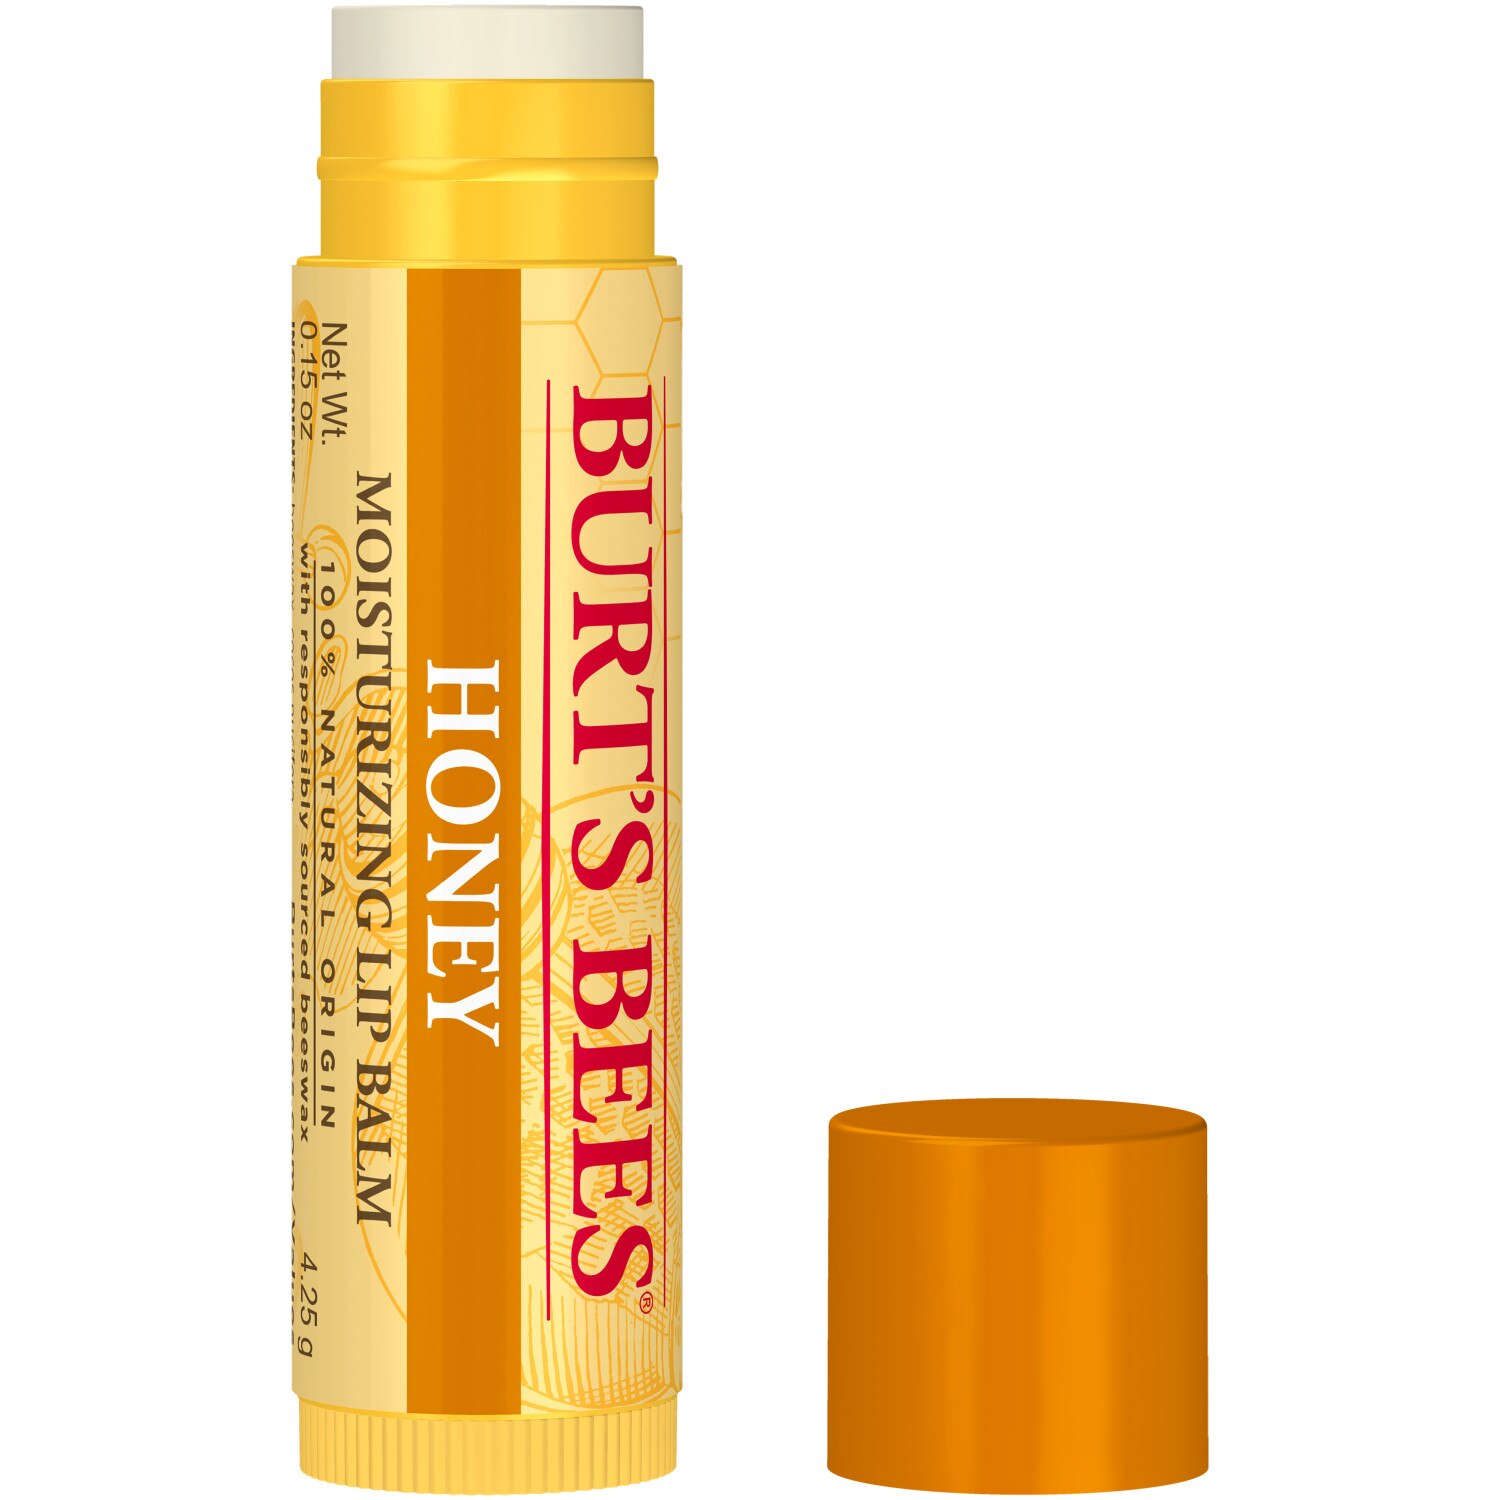 Burt's Bees 100% Natural Moisturizing Lip Balm, Honey with Beeswax